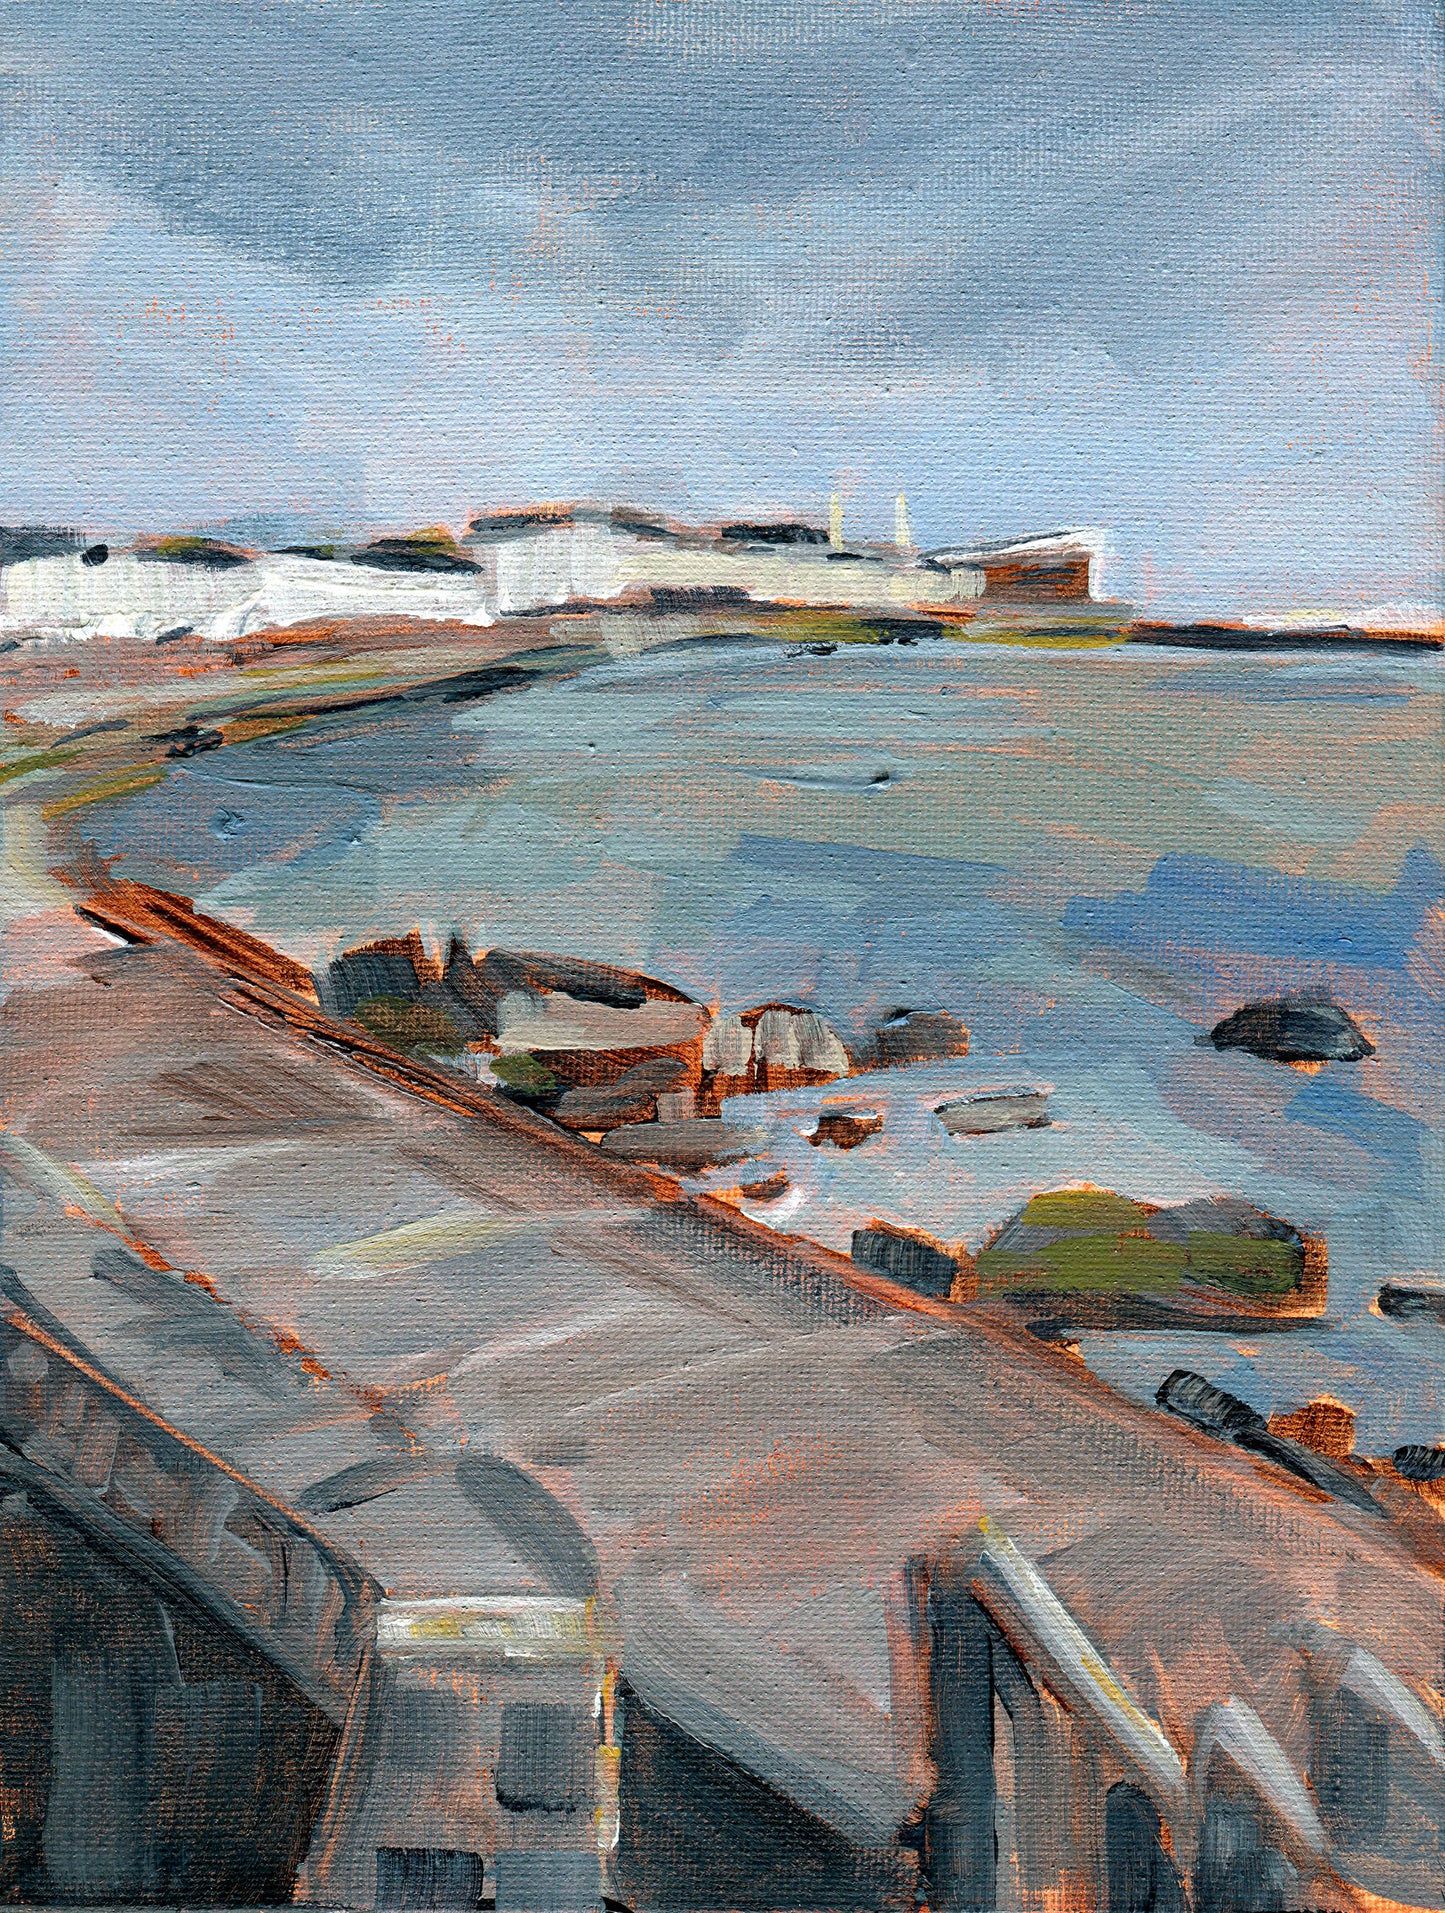 "Dun Laoghaire" seascape painting